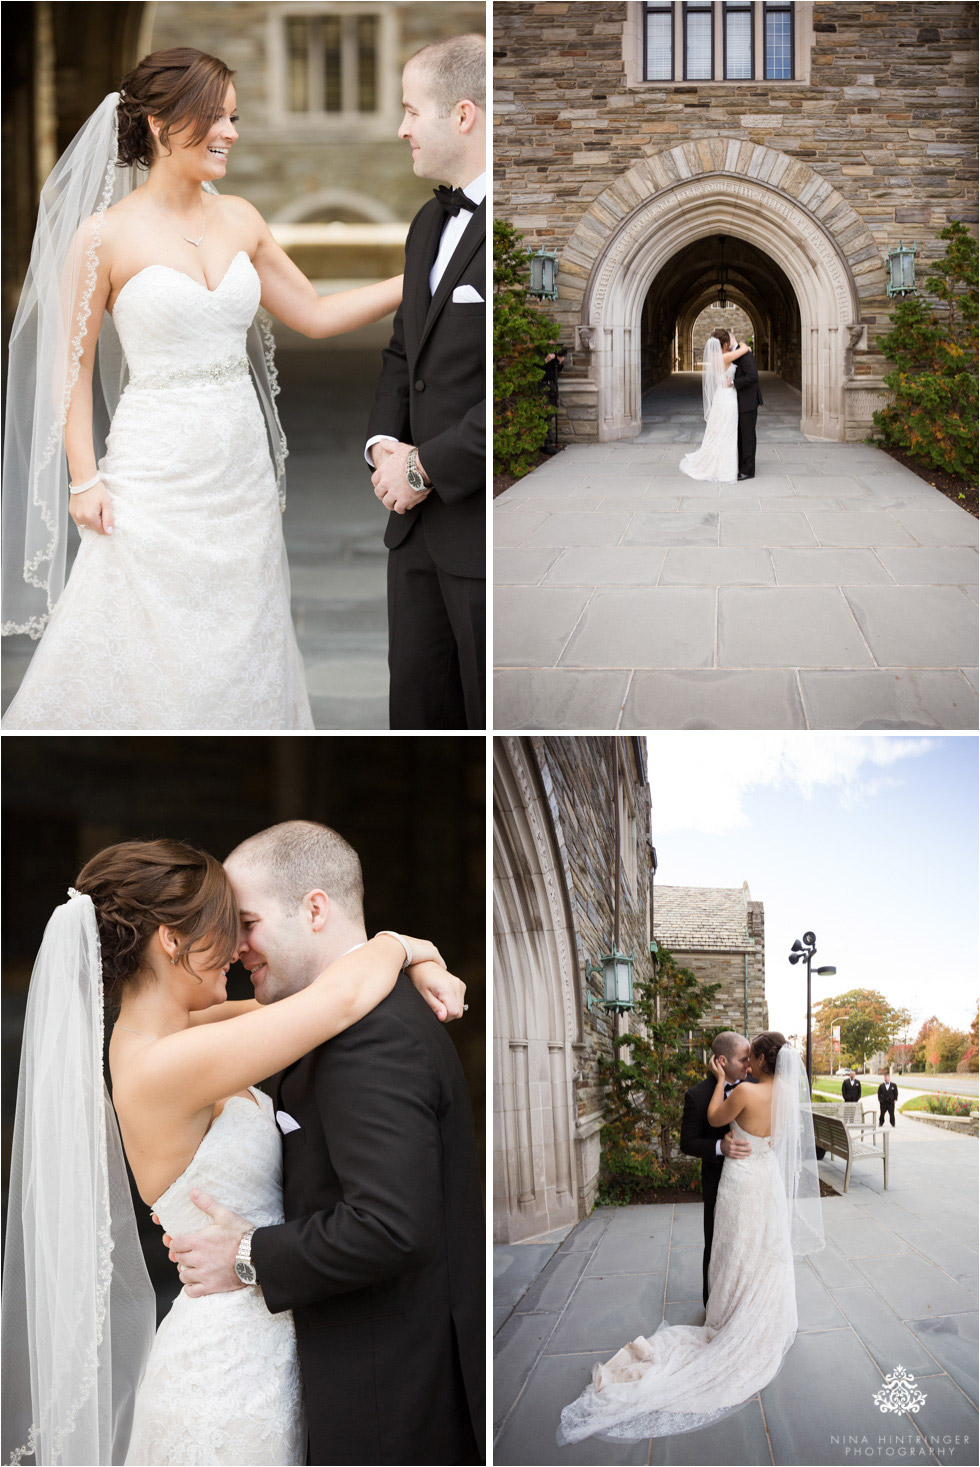 First look at Saint Josephs University campus in Philadelphia, Pennsylvania - Blog of Nina Hintringer Photography - Wedding Photography, Wedding Reportage and Destination Weddings